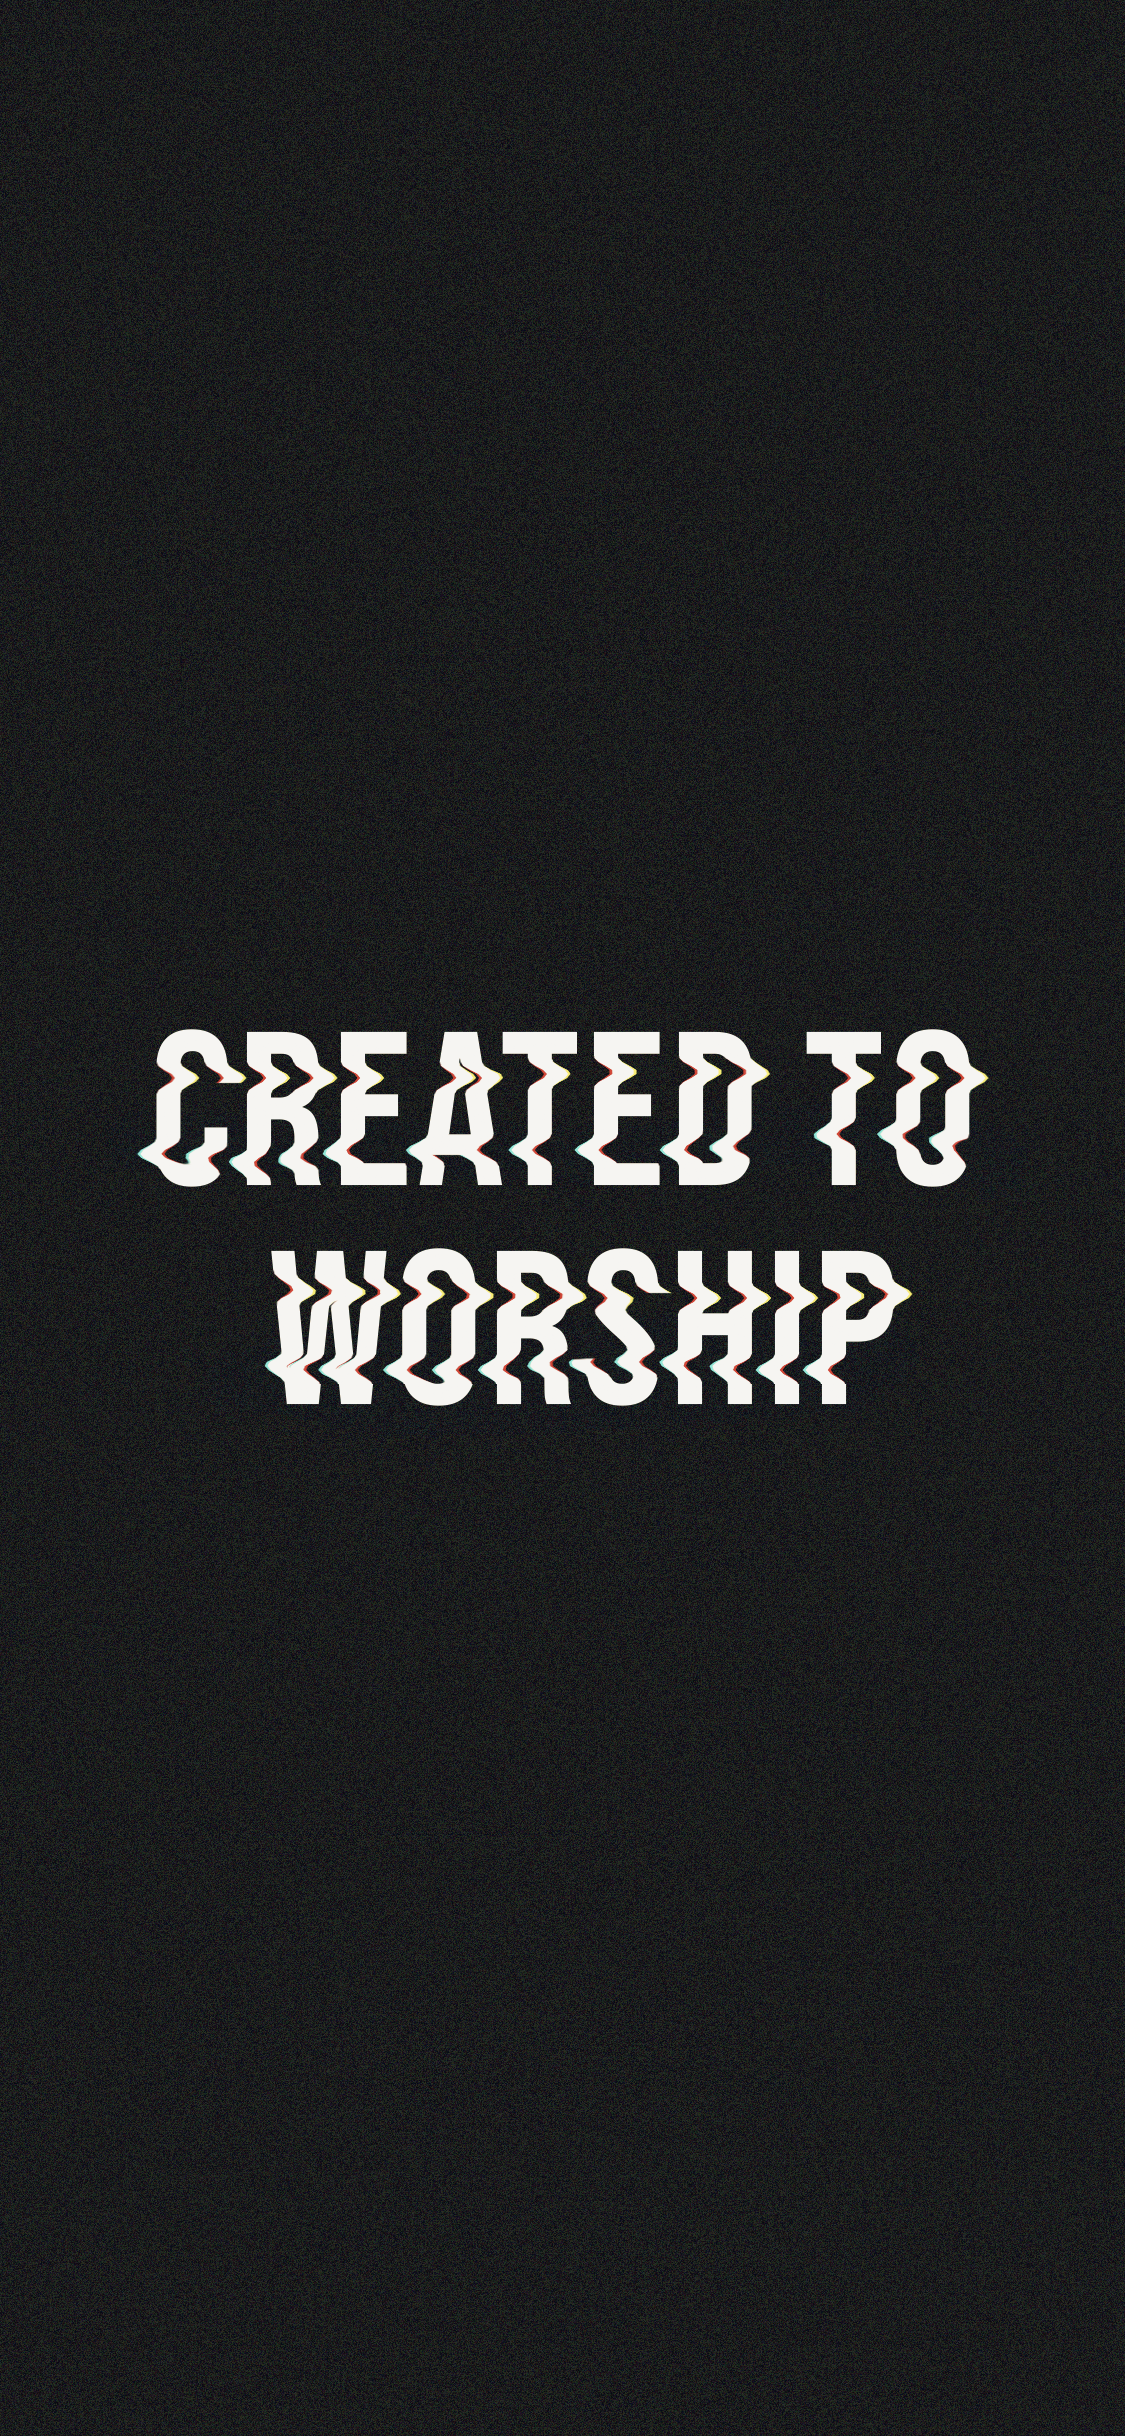 Aesthetic Worship Lock Screen Wallpapers